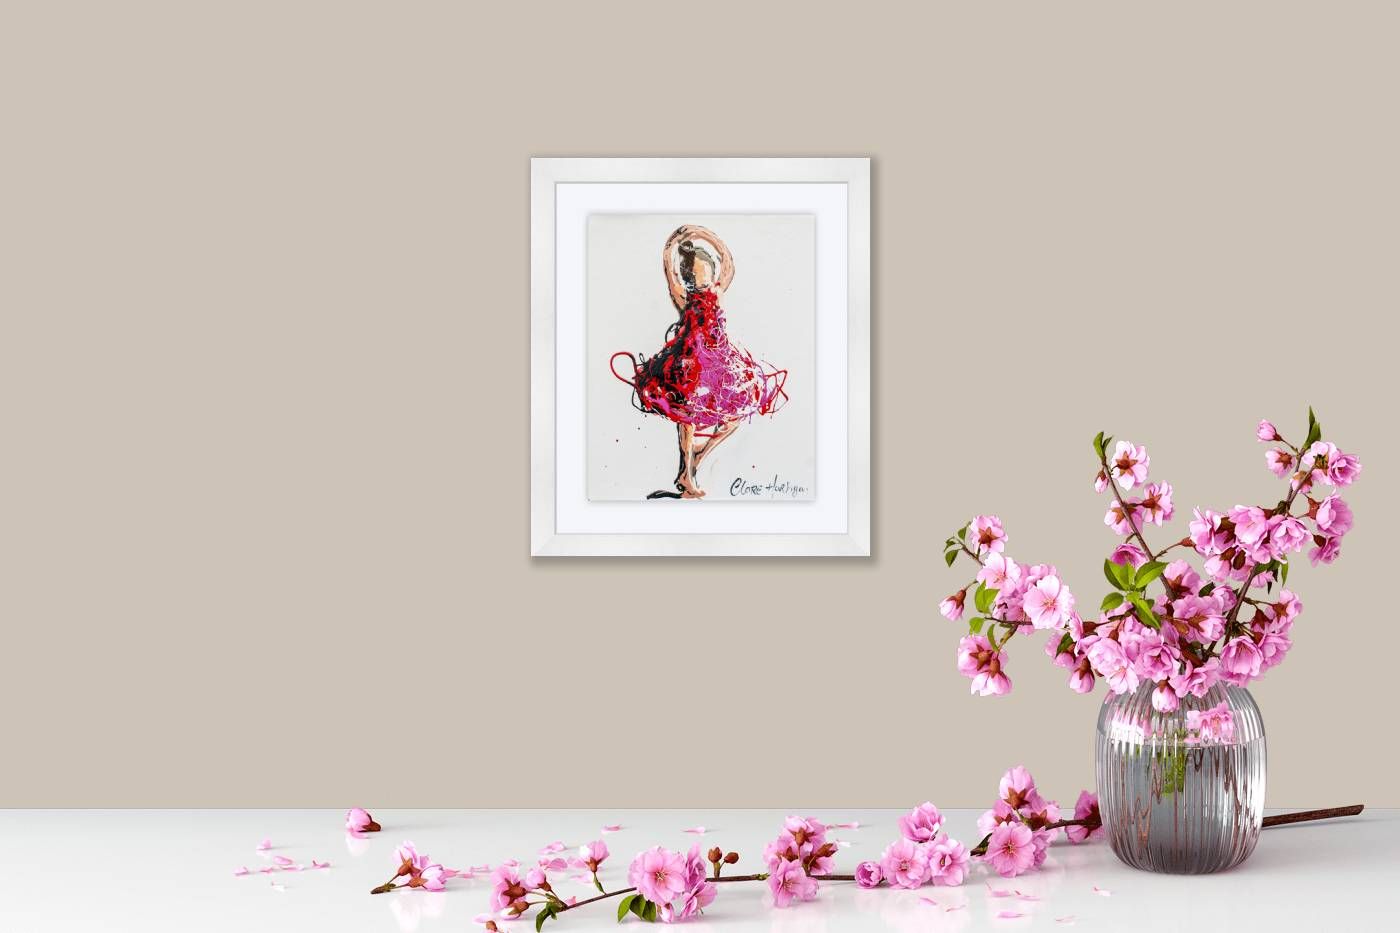 The Ballet Dancer by Clare Hartigan